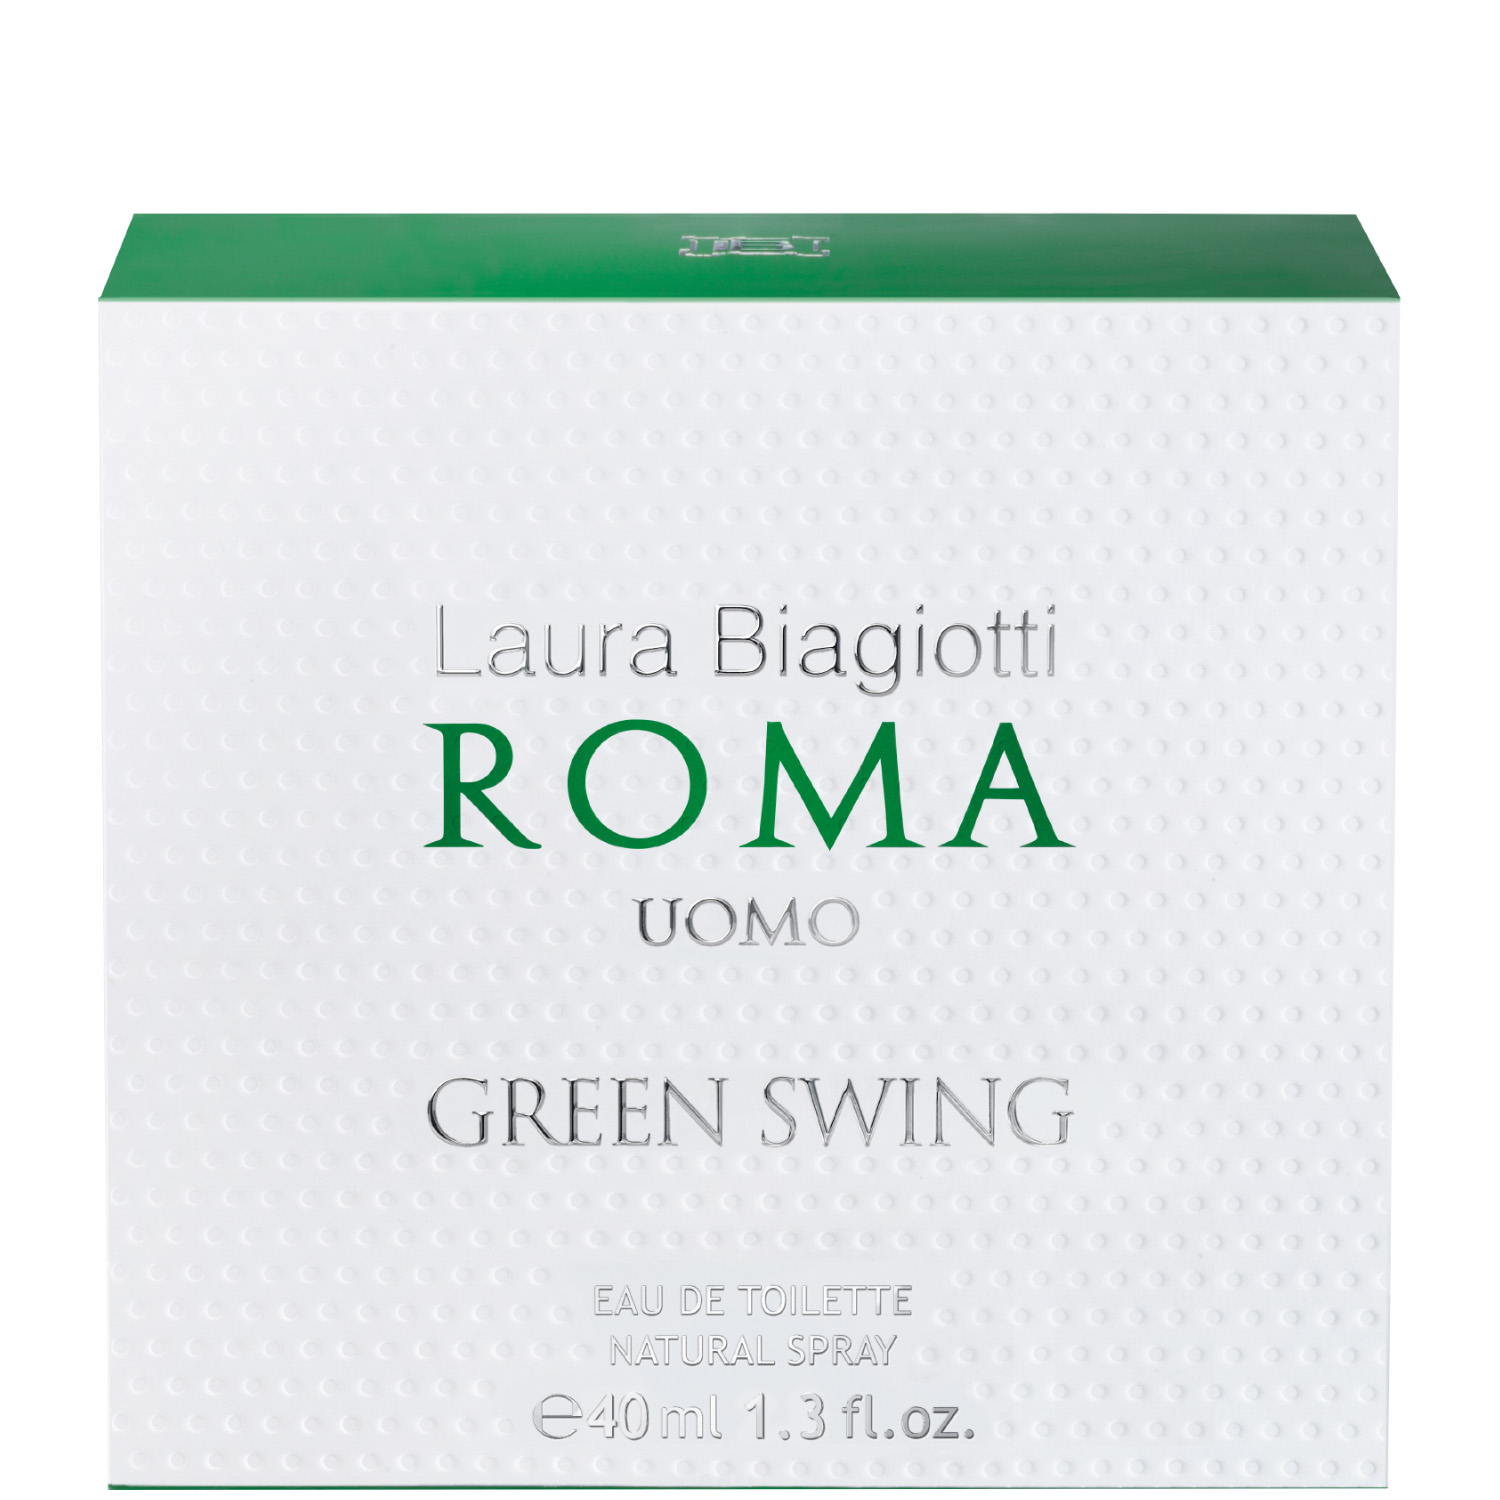 Laura Biagiotti Roma Uomo Green Swing Eau de Toilette 40ml